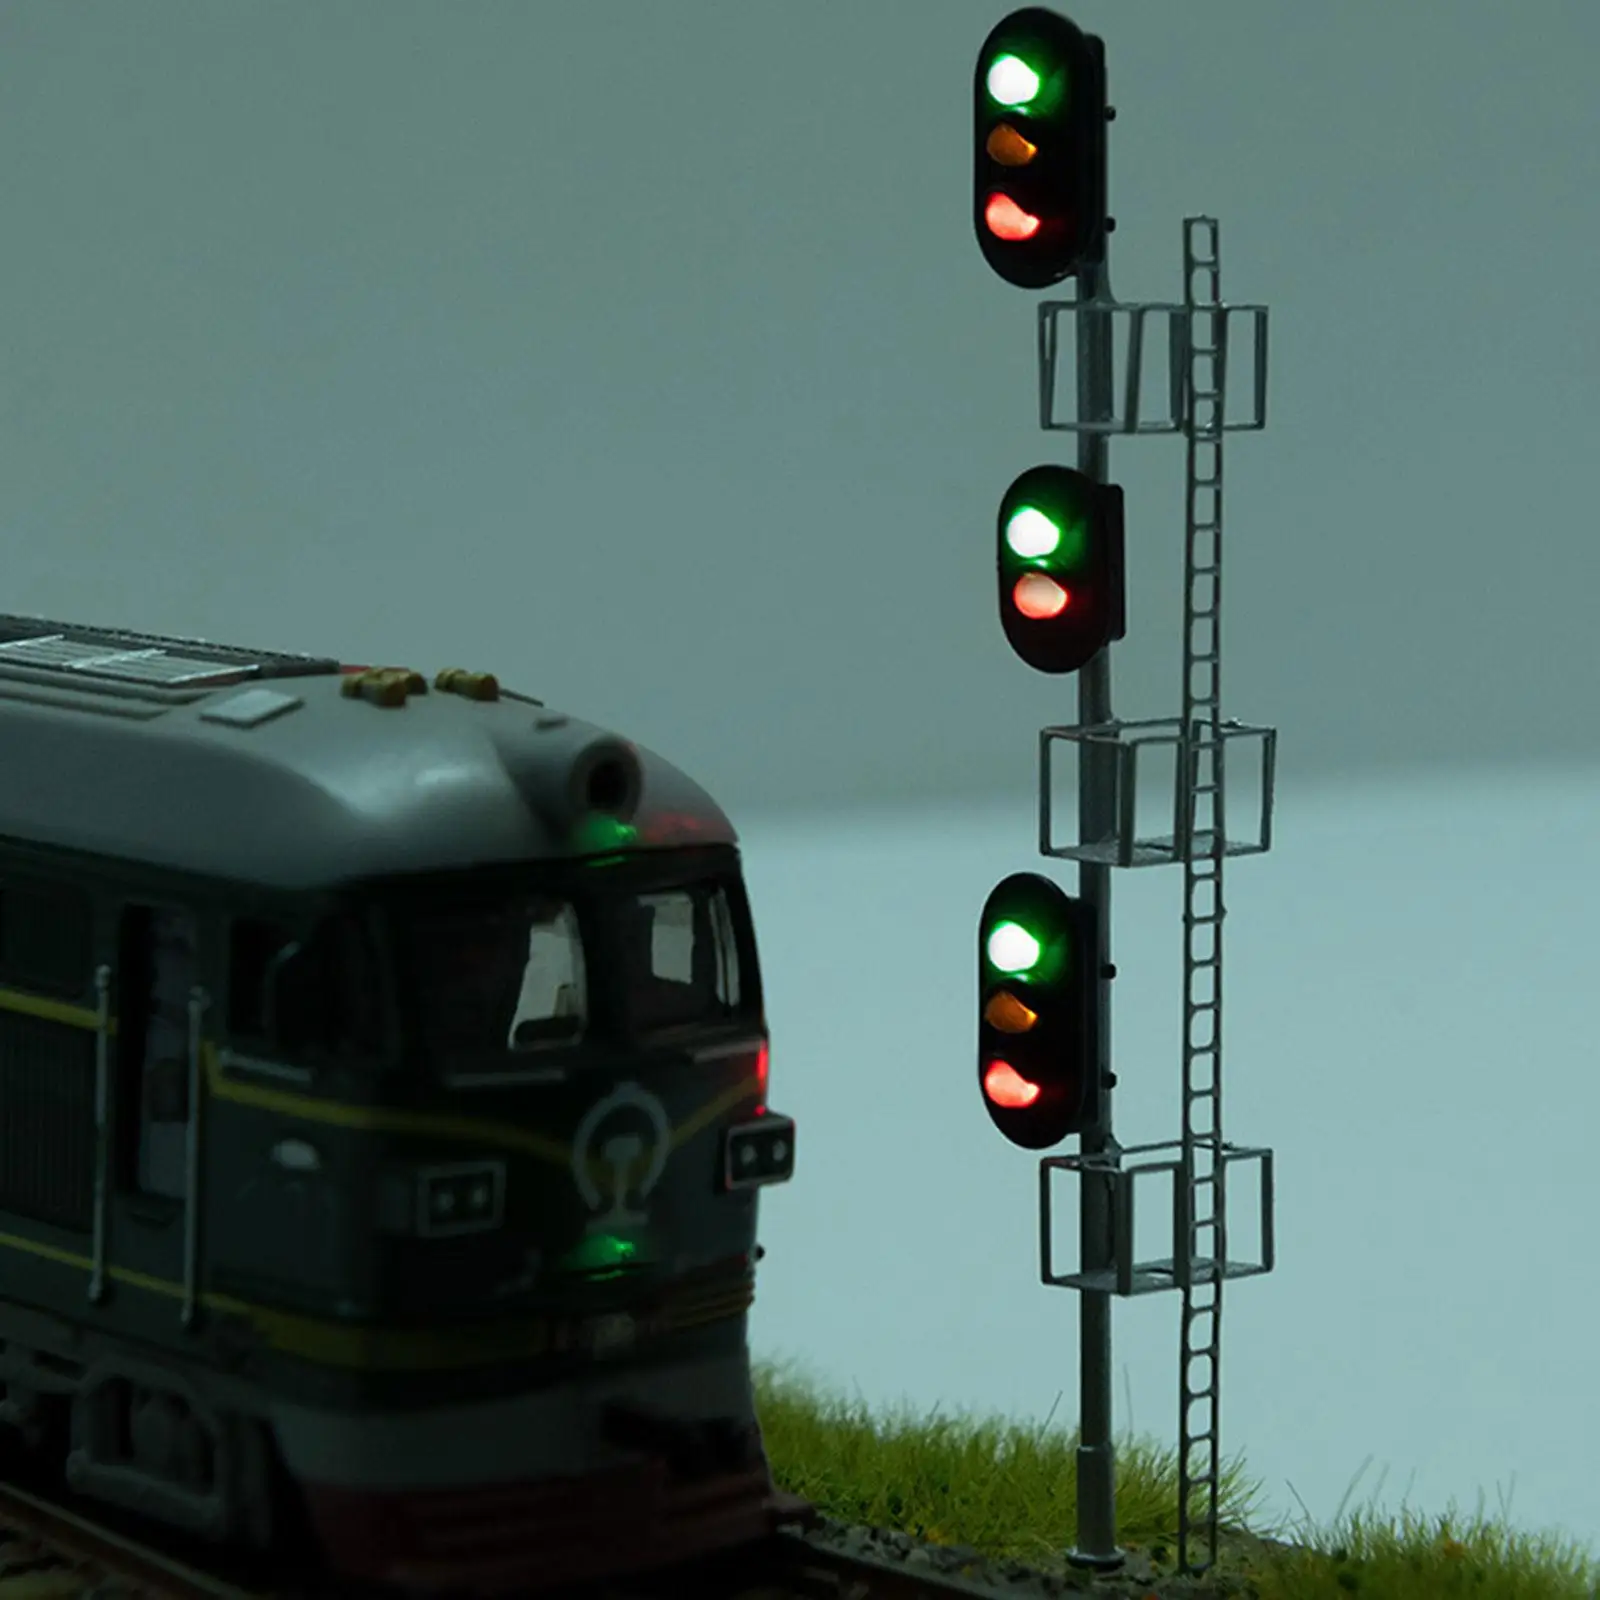 Model Train Traffic Light Miniature for Train Railway Micro Landscape Layout